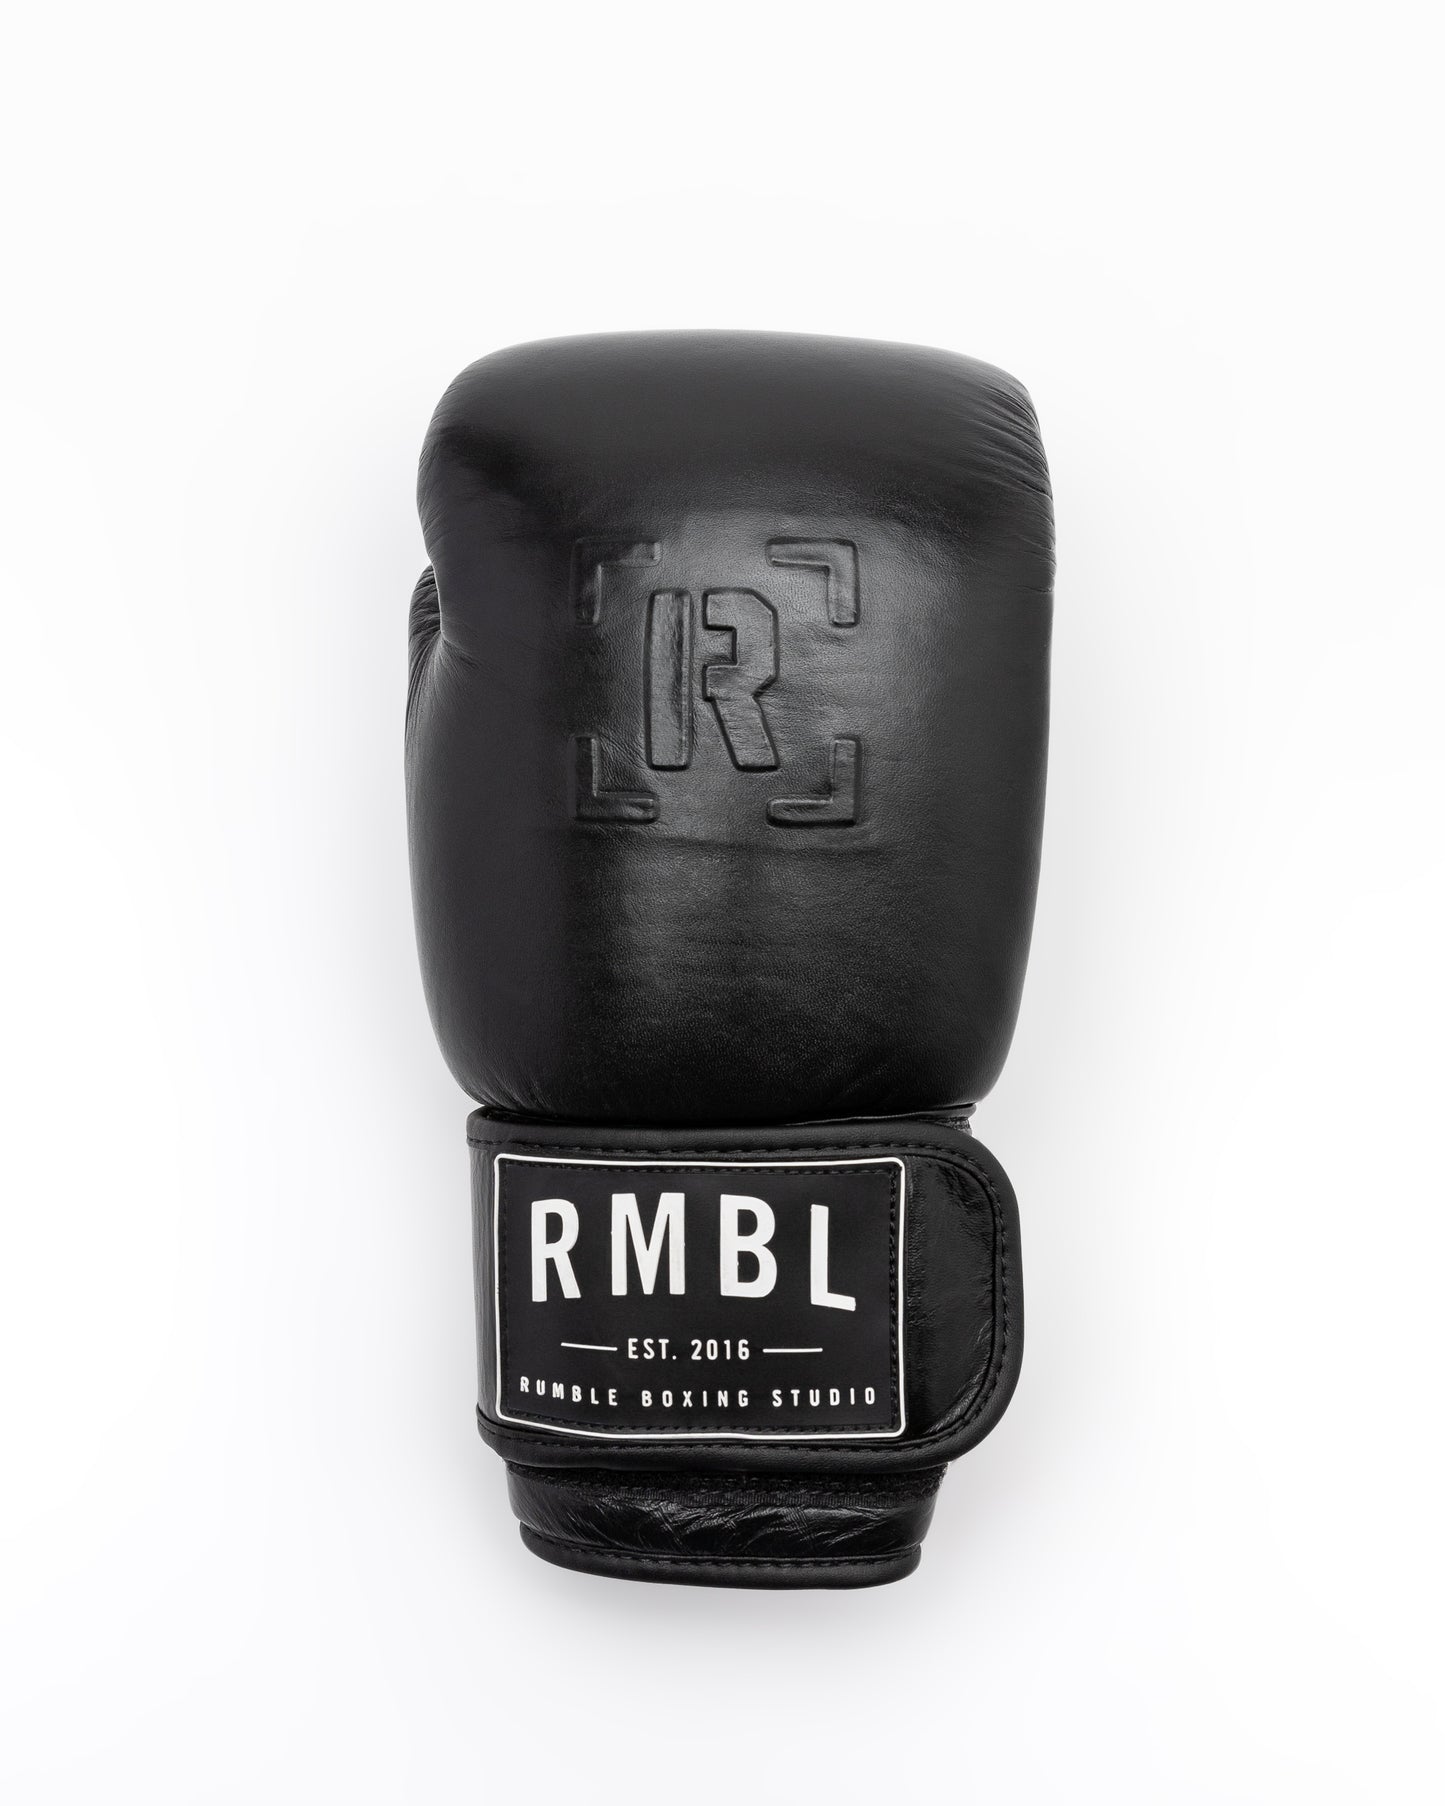 Premium RMBL Leather Gloves Black Embossed